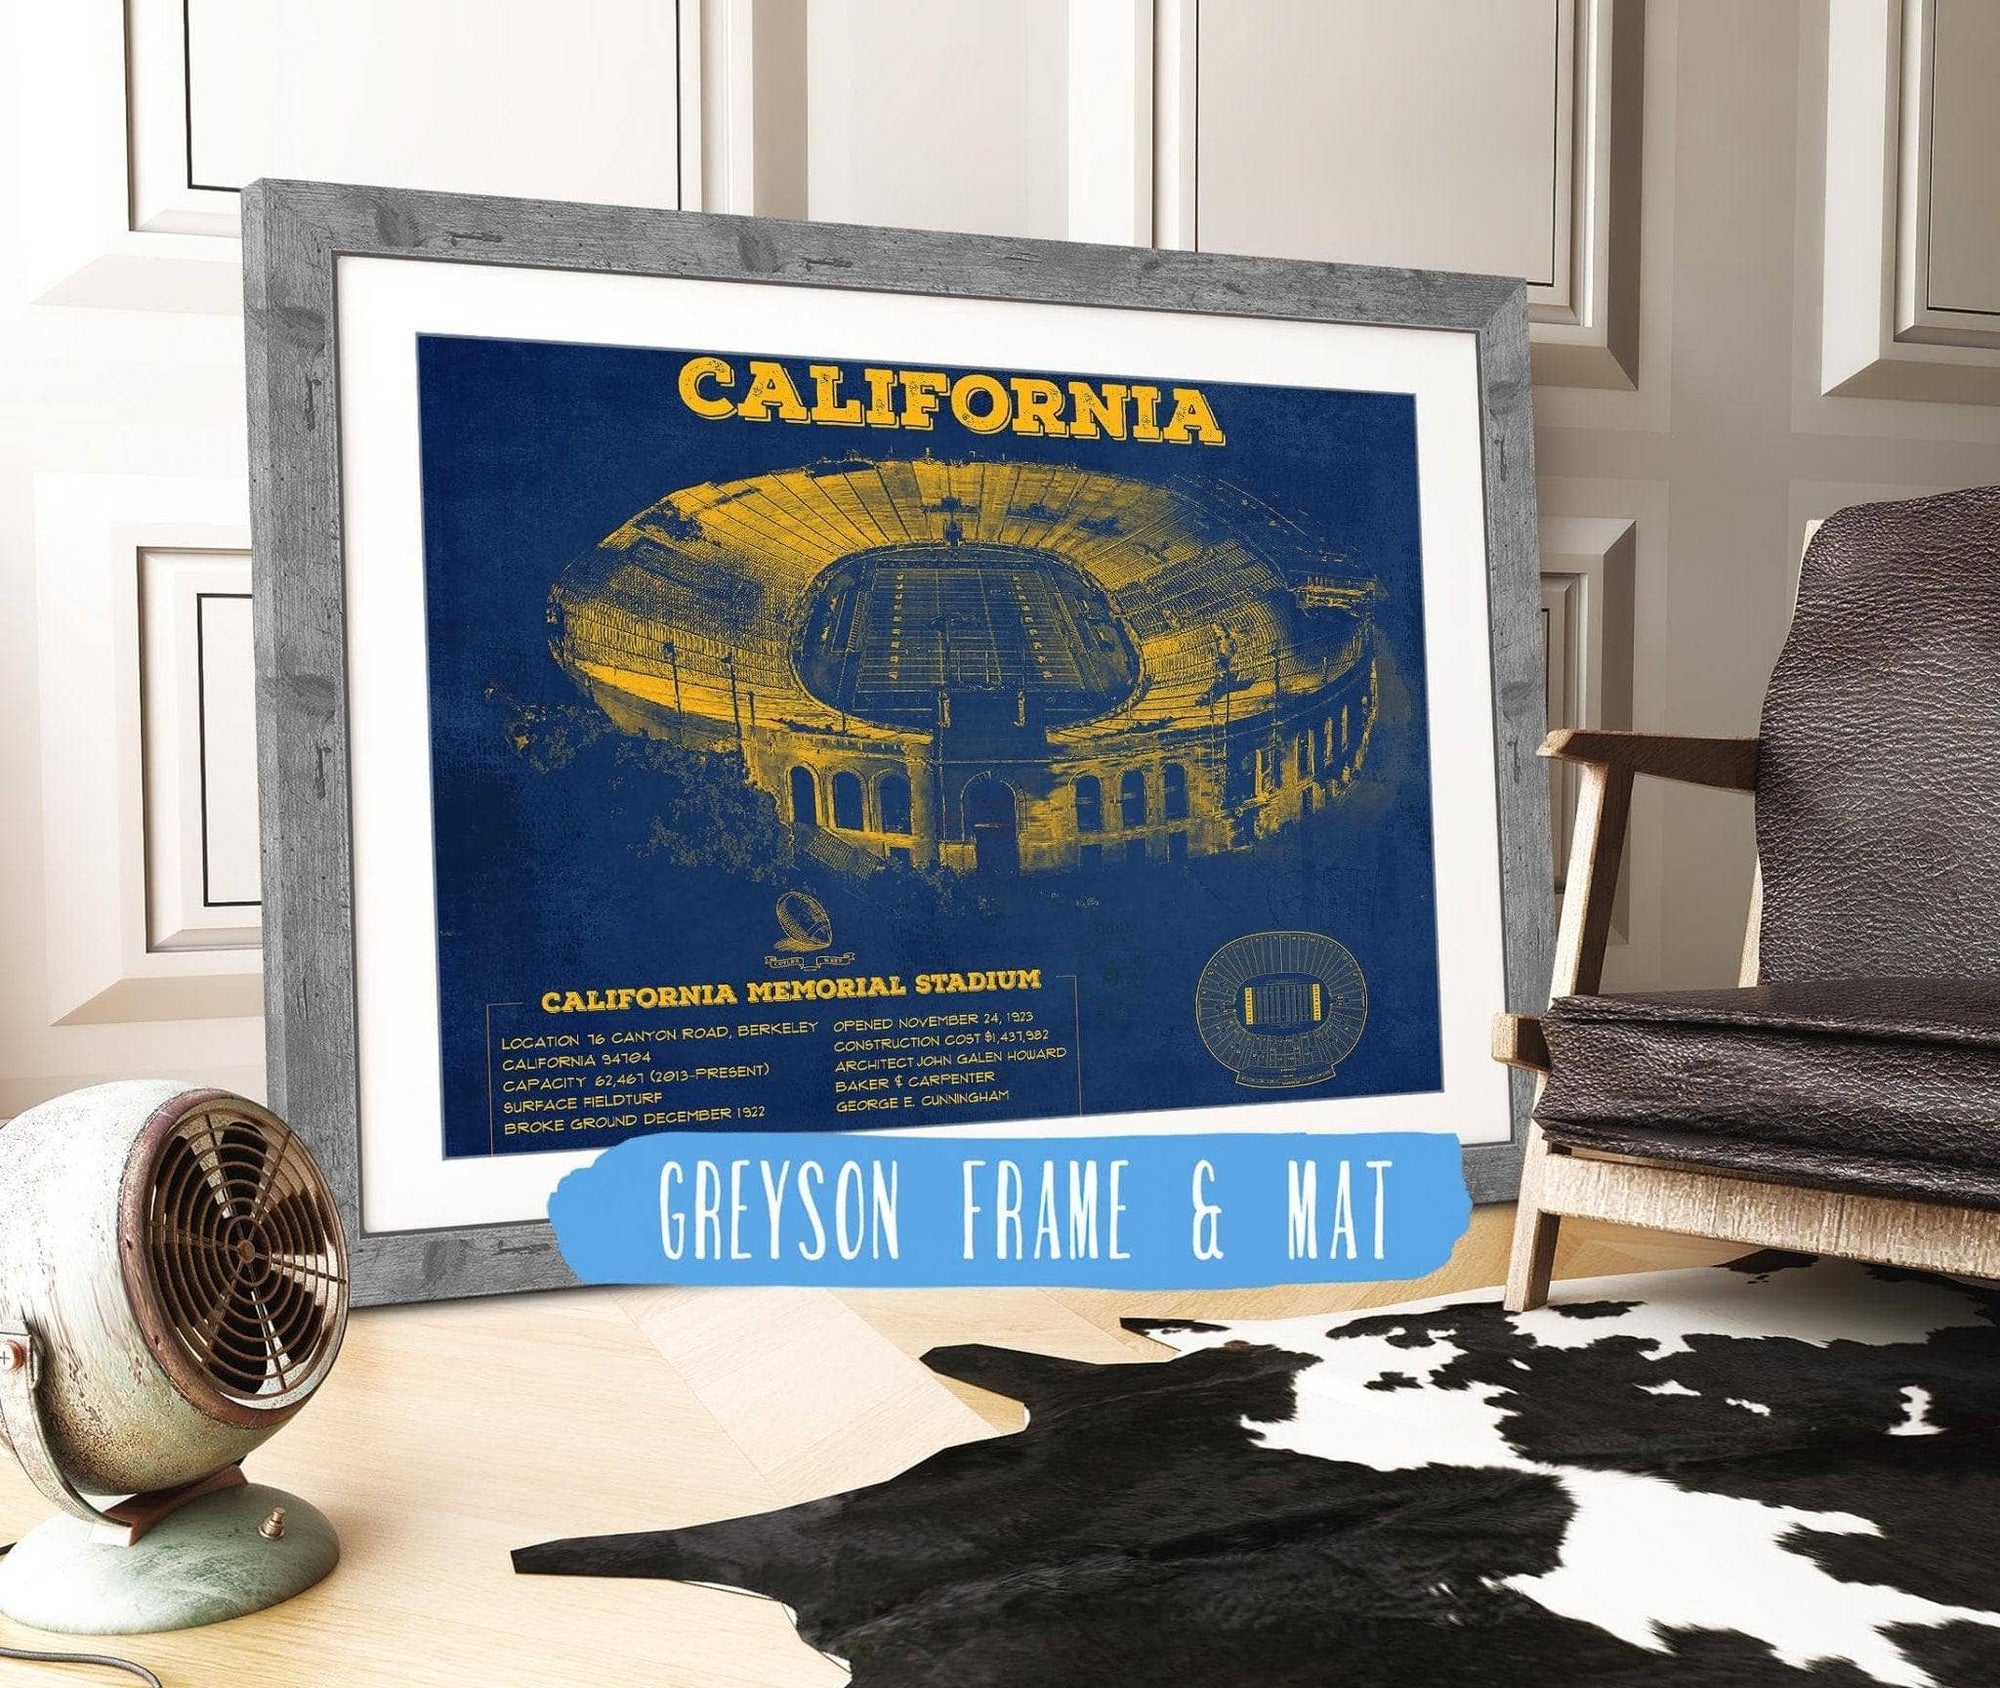 Cutler West College Football Collection 14" x 11" / Greyson Frame & Mat California Memorial Stadium Poster - University of California Bears Vintage Stadium & Blueprint Art Print 750877871_45247